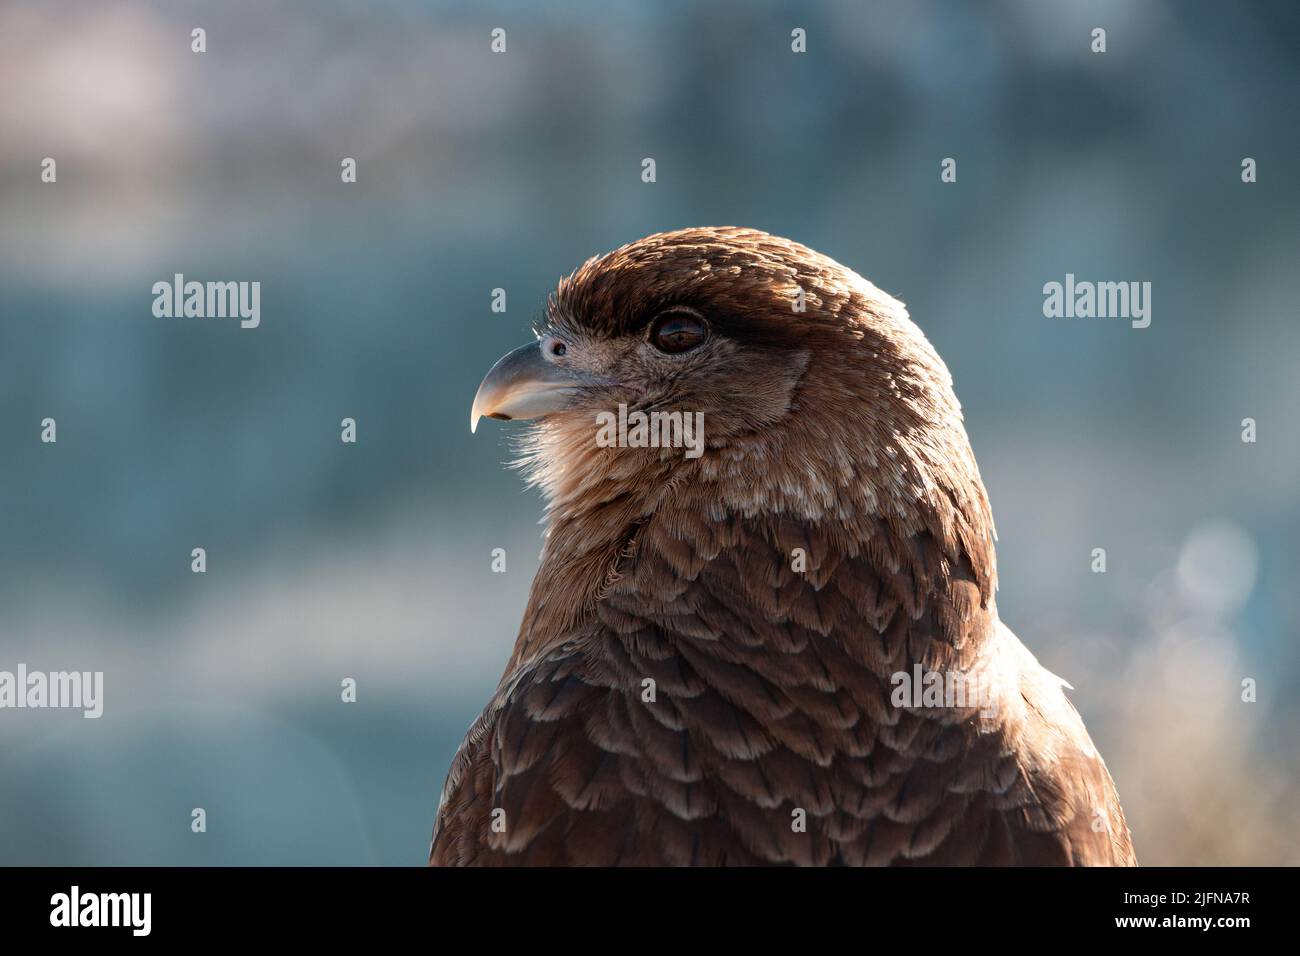 Argentine Patagonian Hawk in closeup Stock Photo